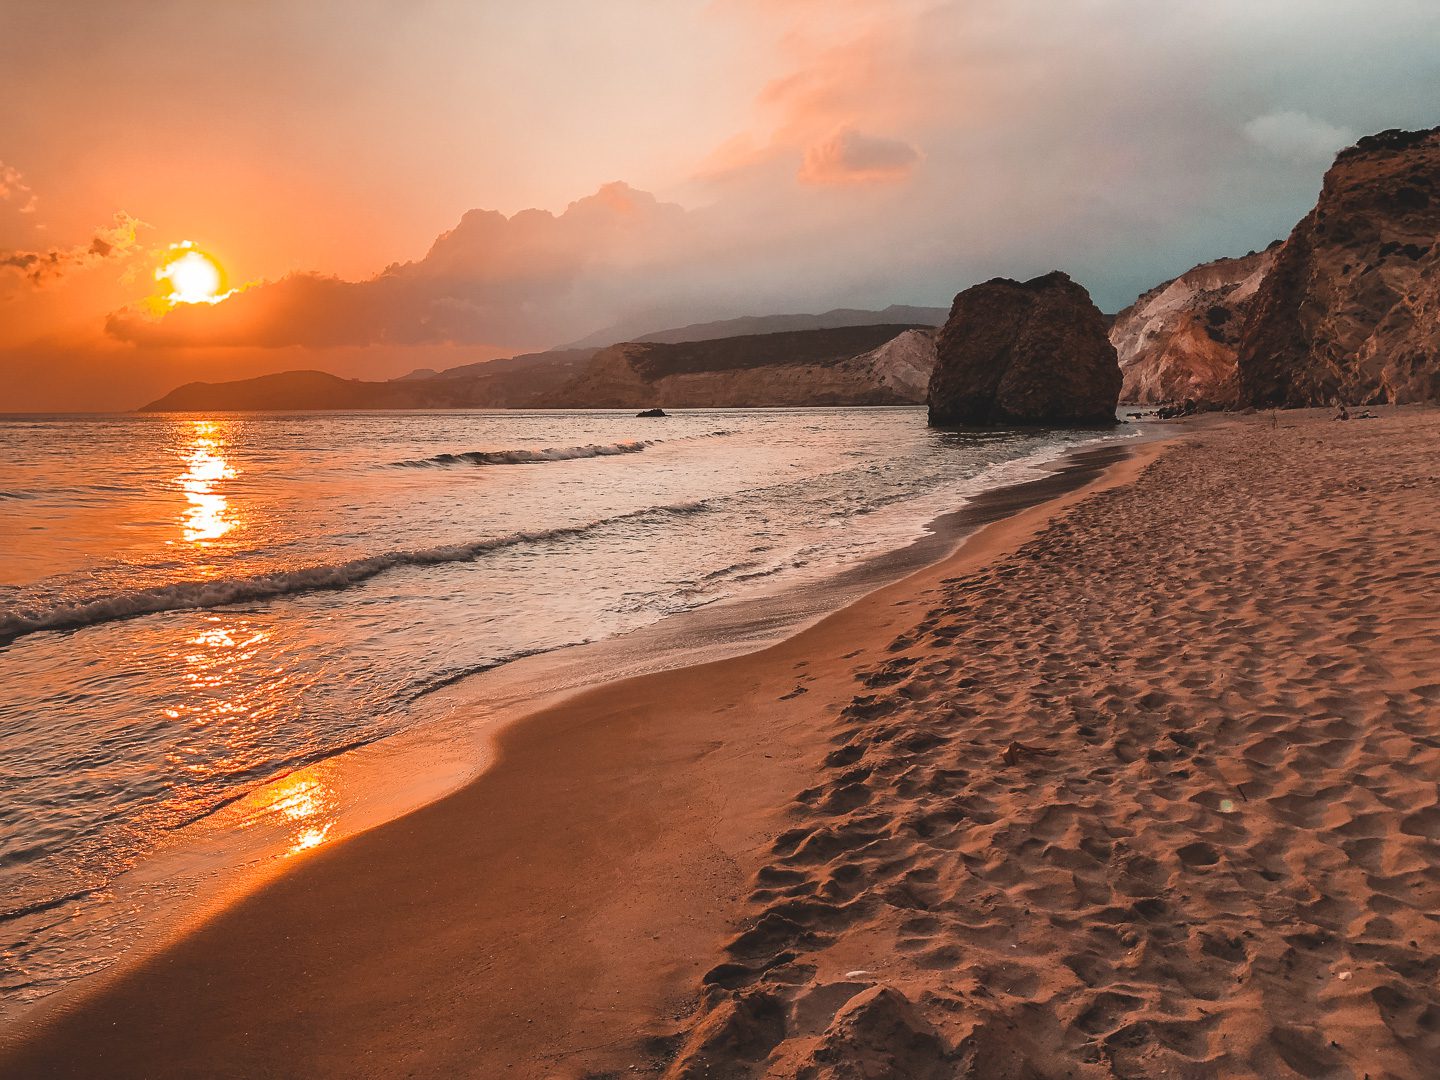 A iconic orange sunset reflects on he sandy shores of Firiplaka Beach in Milos Island, Greece